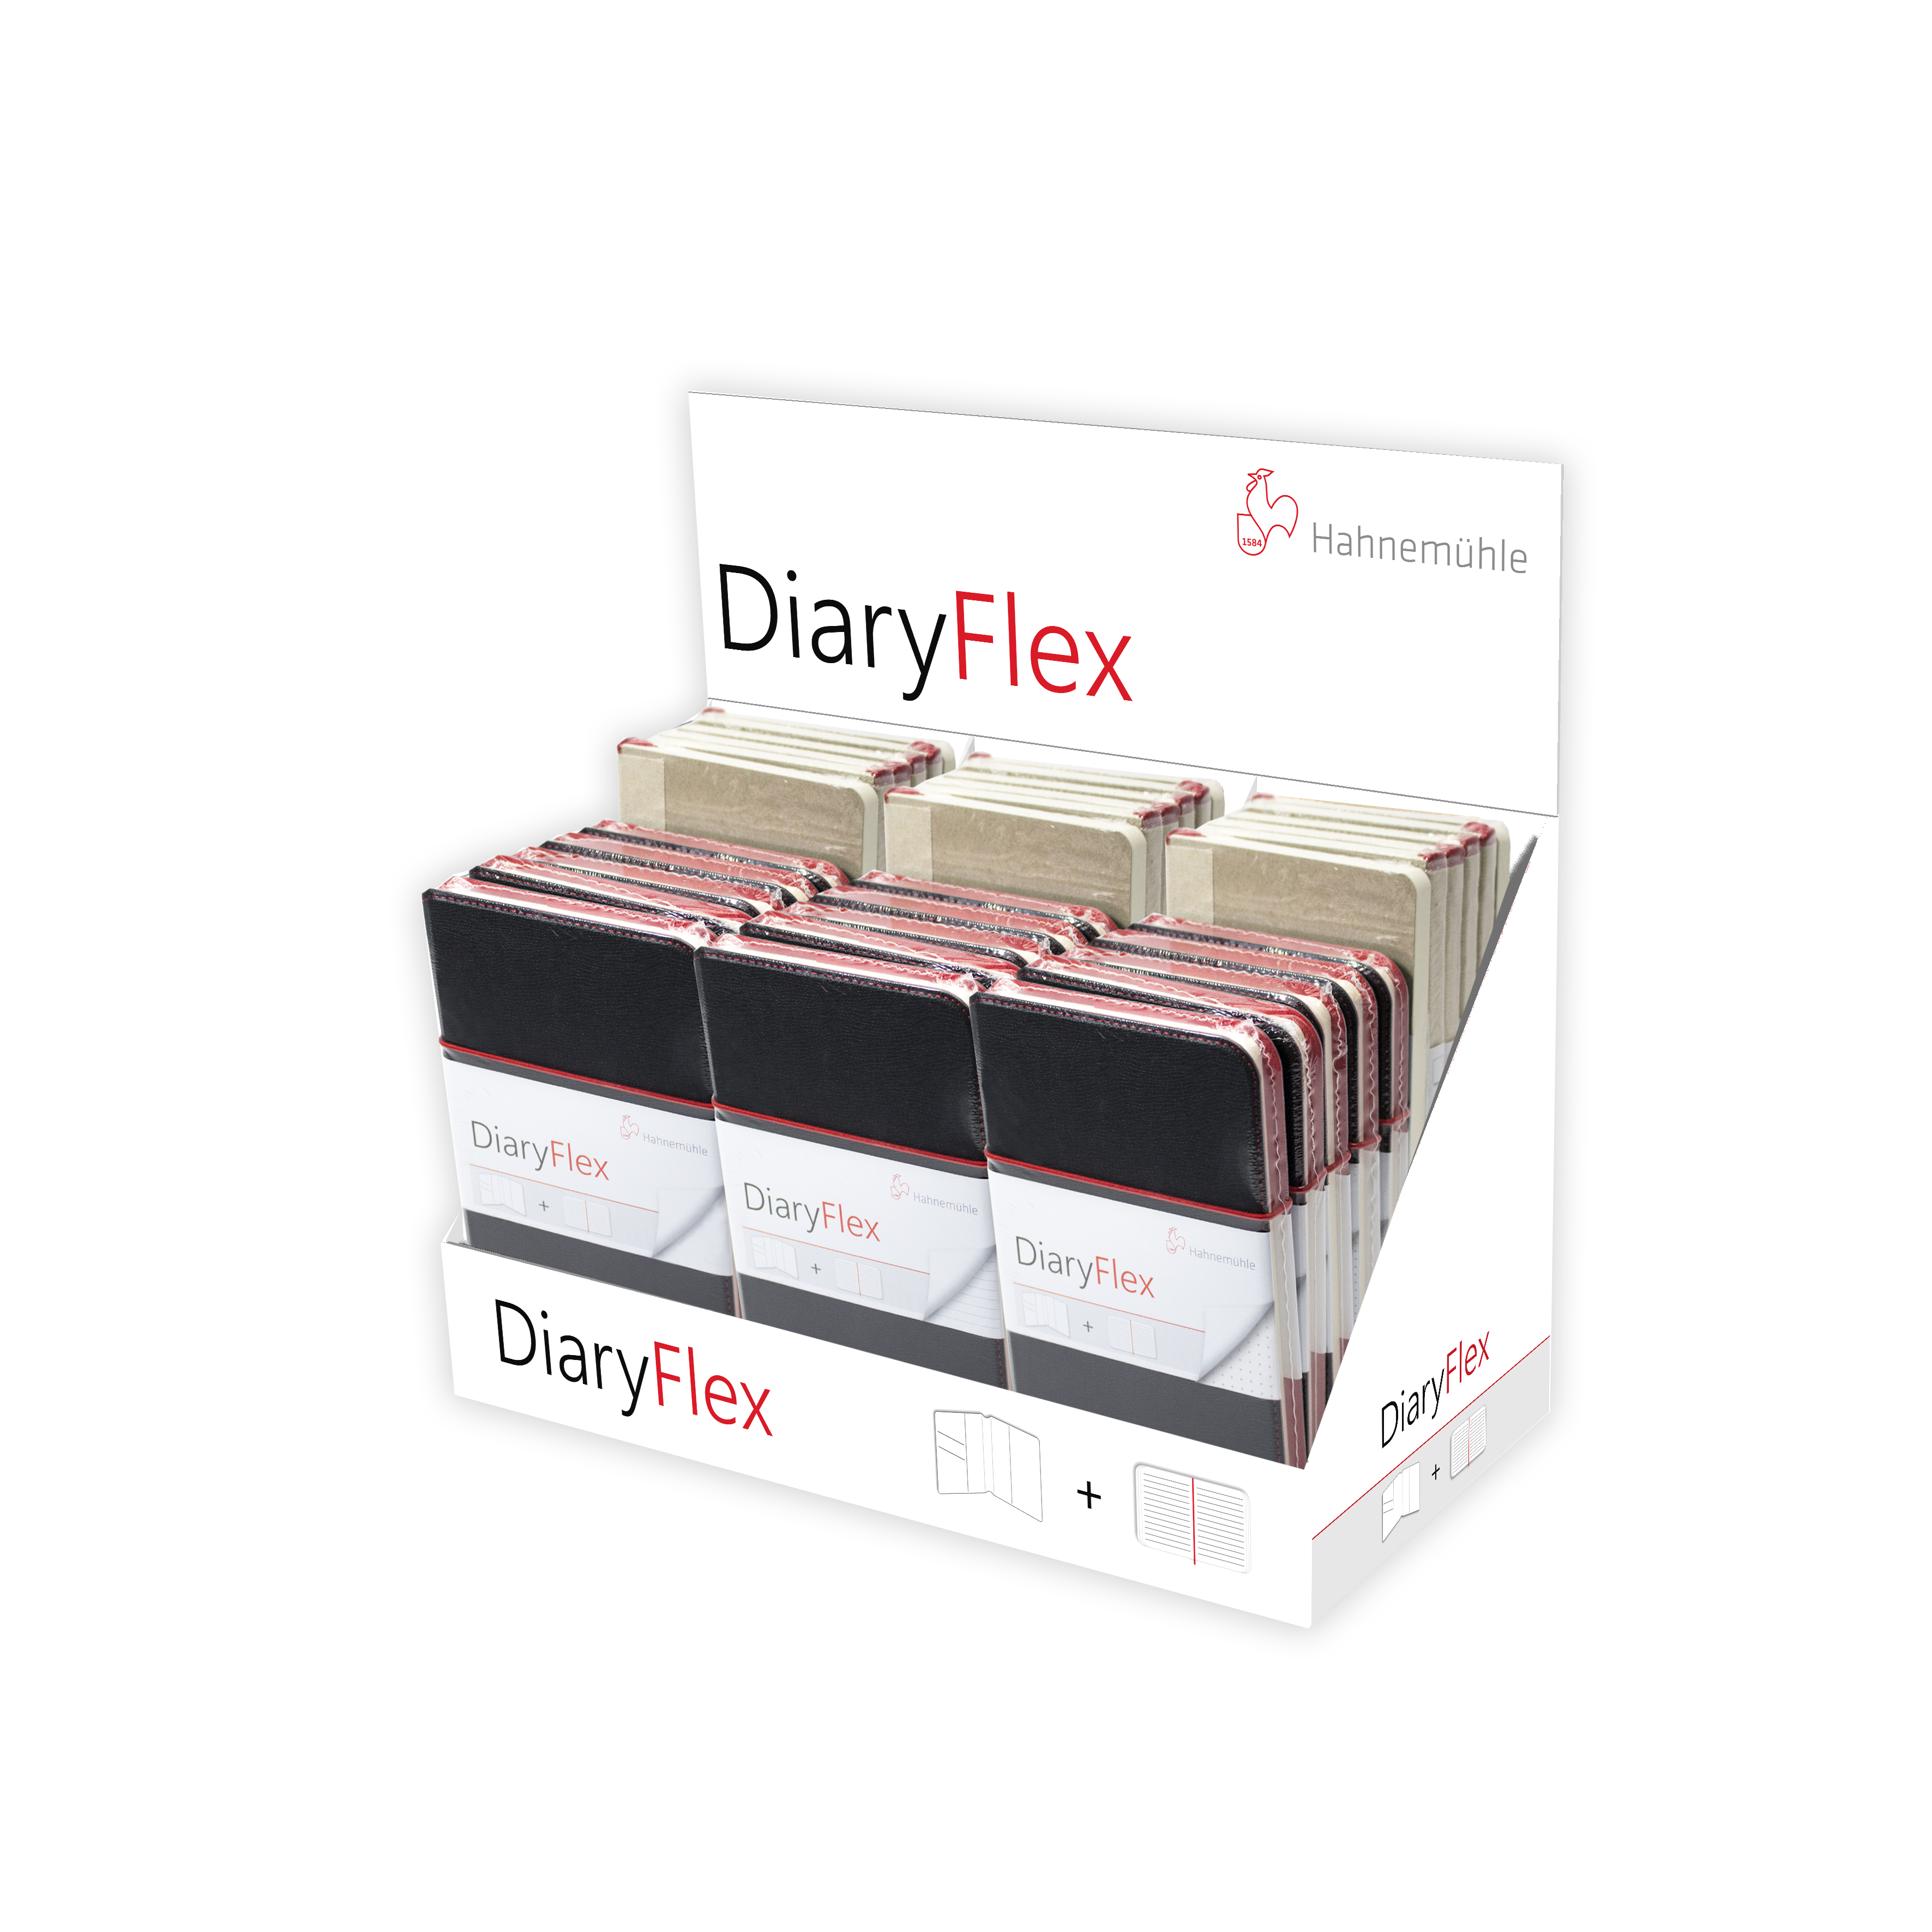 DiaryFlex - Thekendisplay